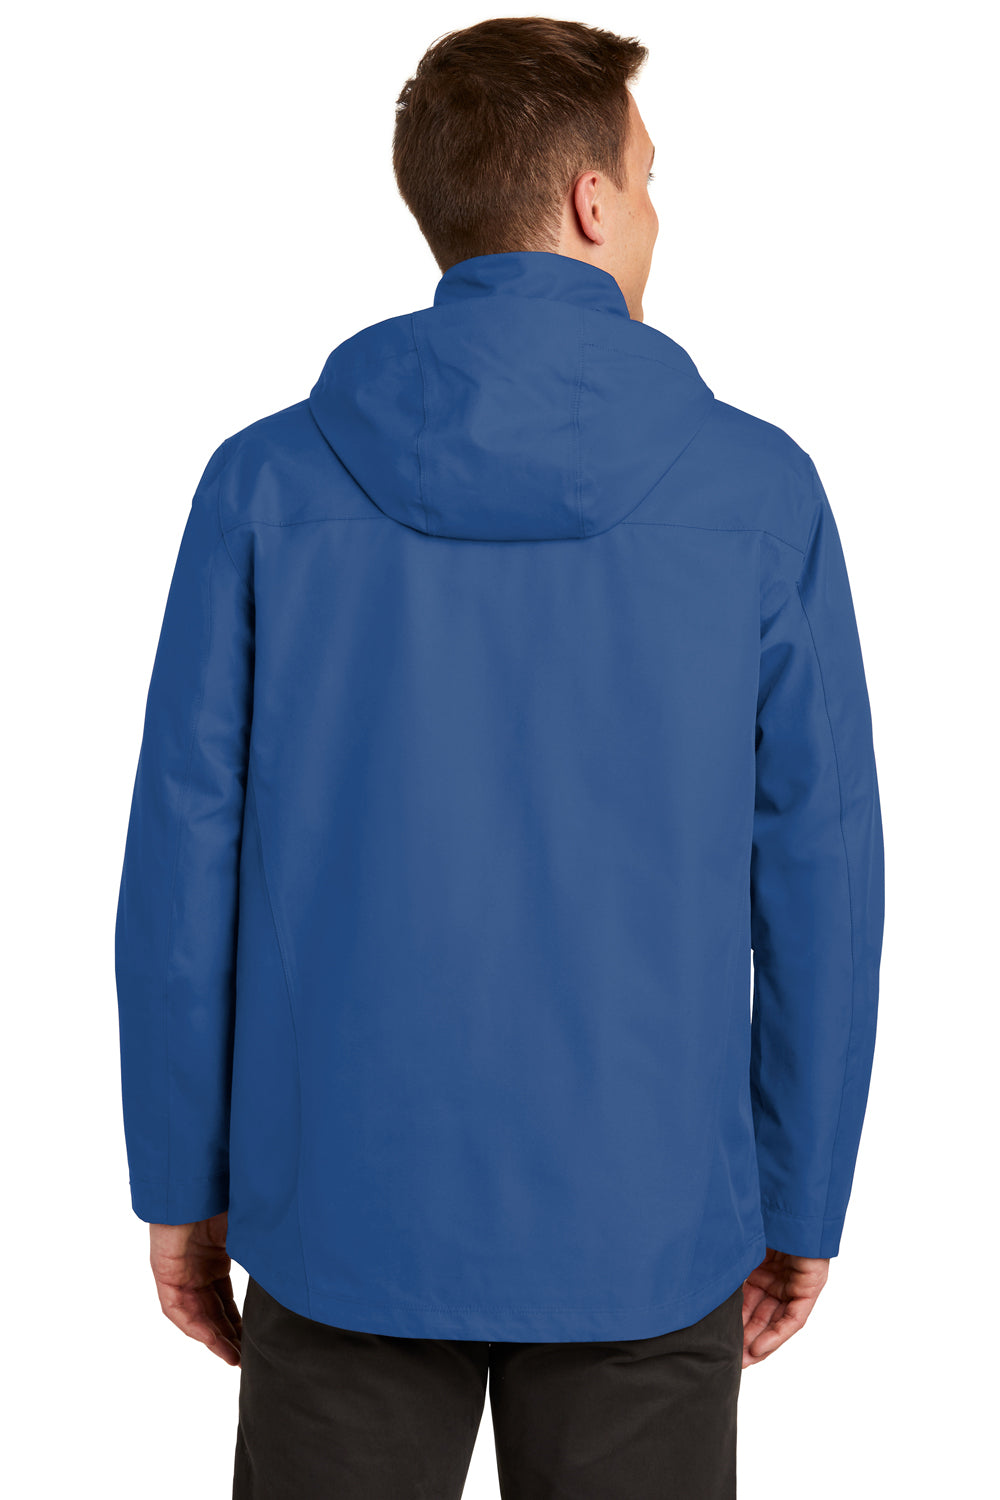 Port Authority J900 Mens Collective Waterproof Full Zip Hooded Jacket Night Sky Blue Back